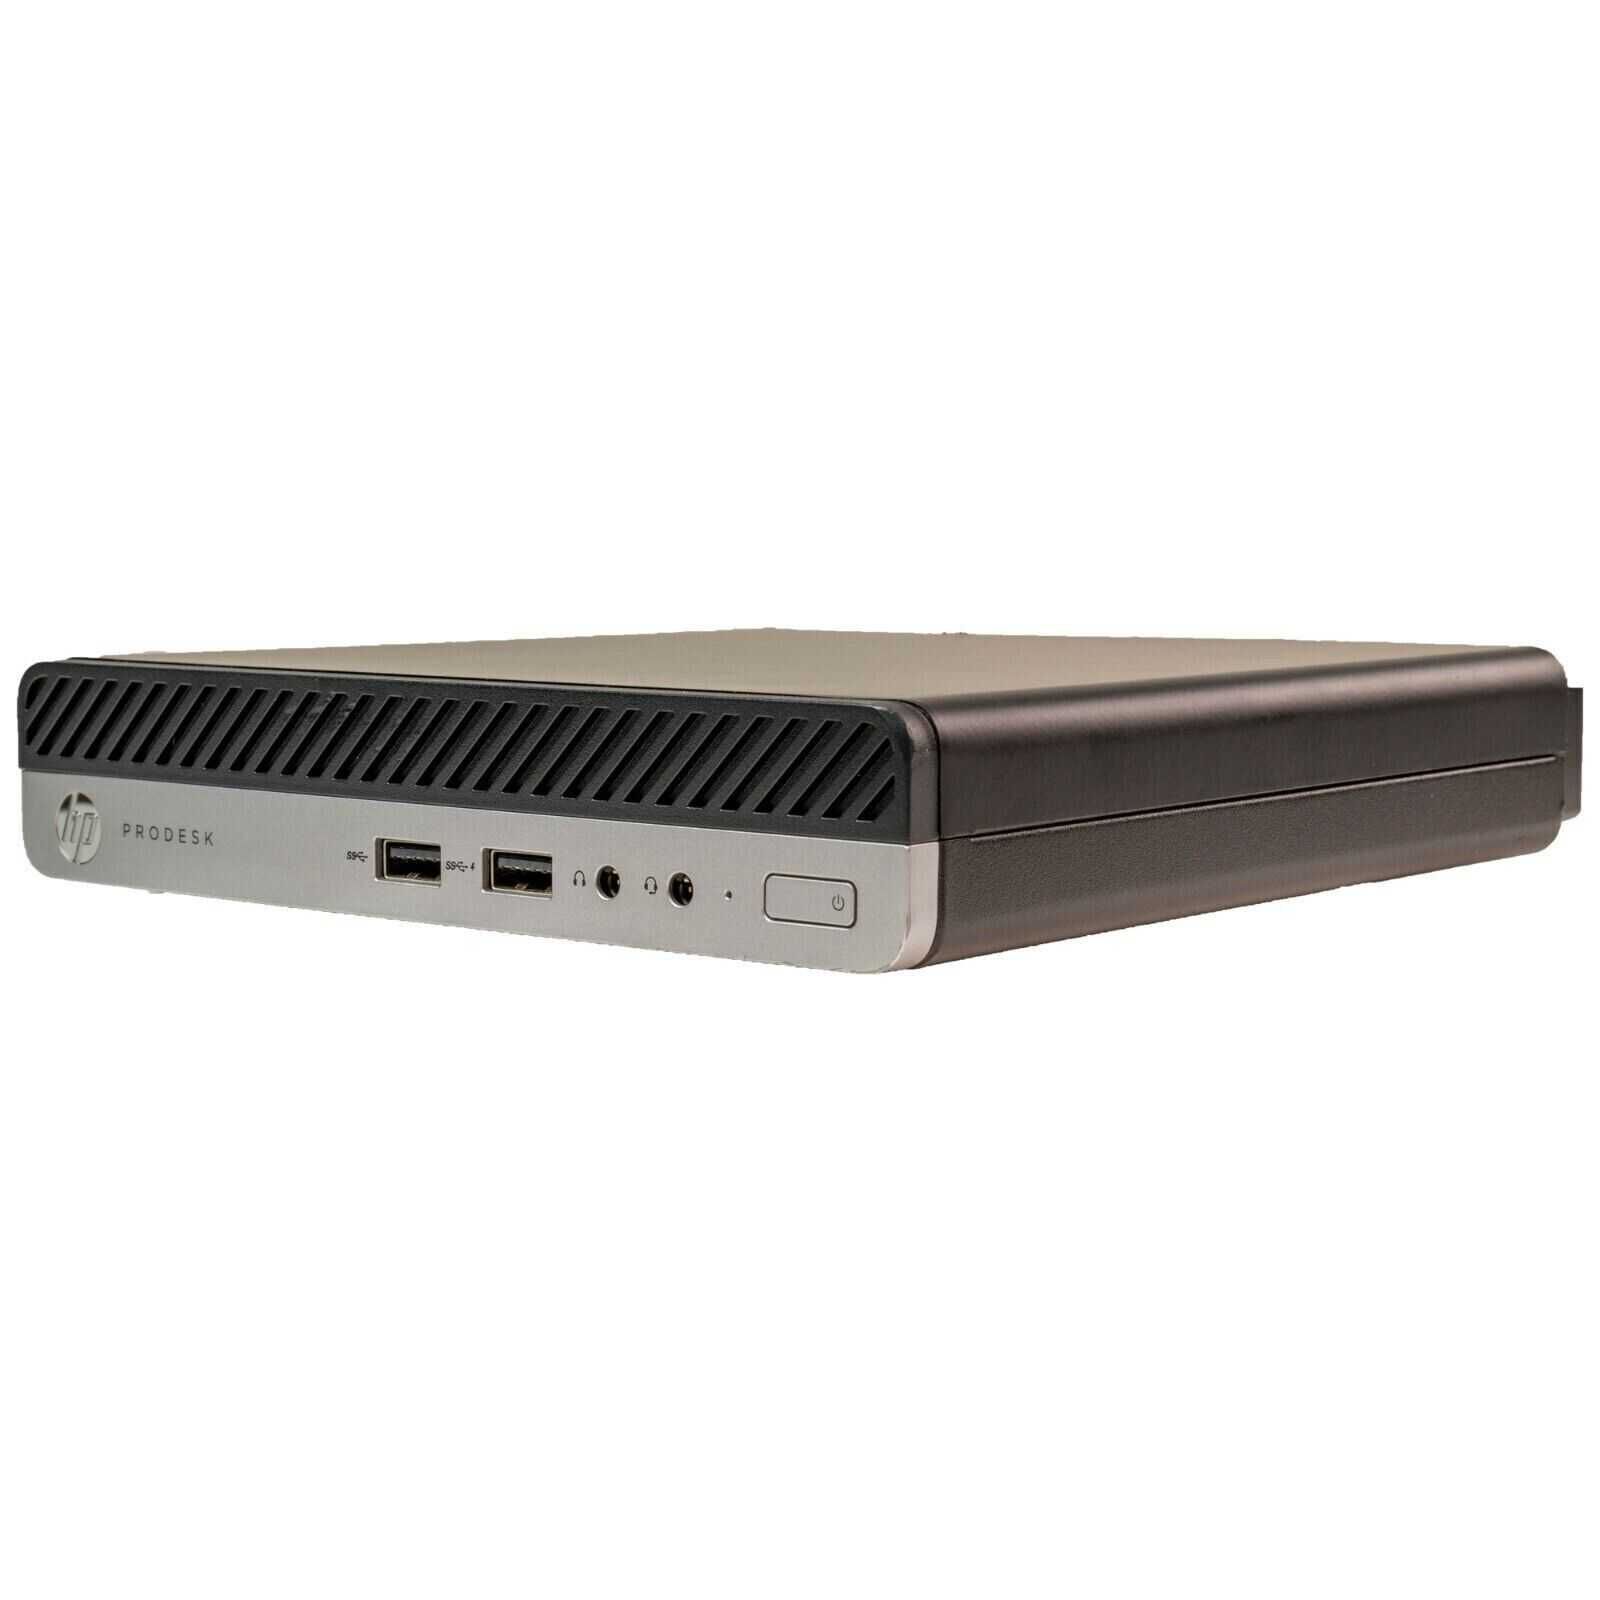 Міні ПК nettop HP ProDesk G4 DM 35W i5-8400T/8Gb/250Gb SSD nvme/БЖ